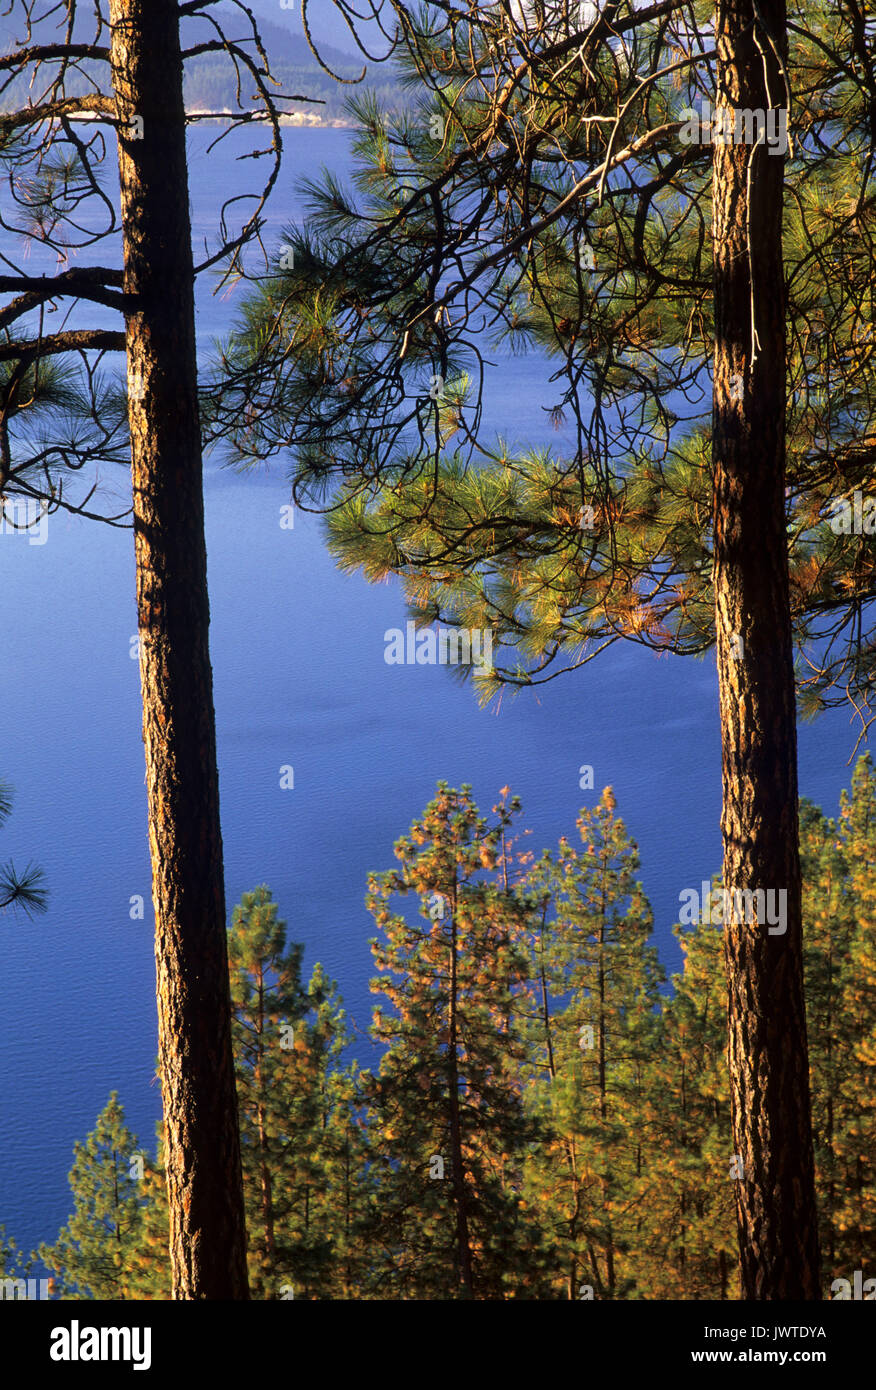 Franklin D Roosevelt Lake, Lake Roosevelt National Recreation Area, Washington Stock Photo